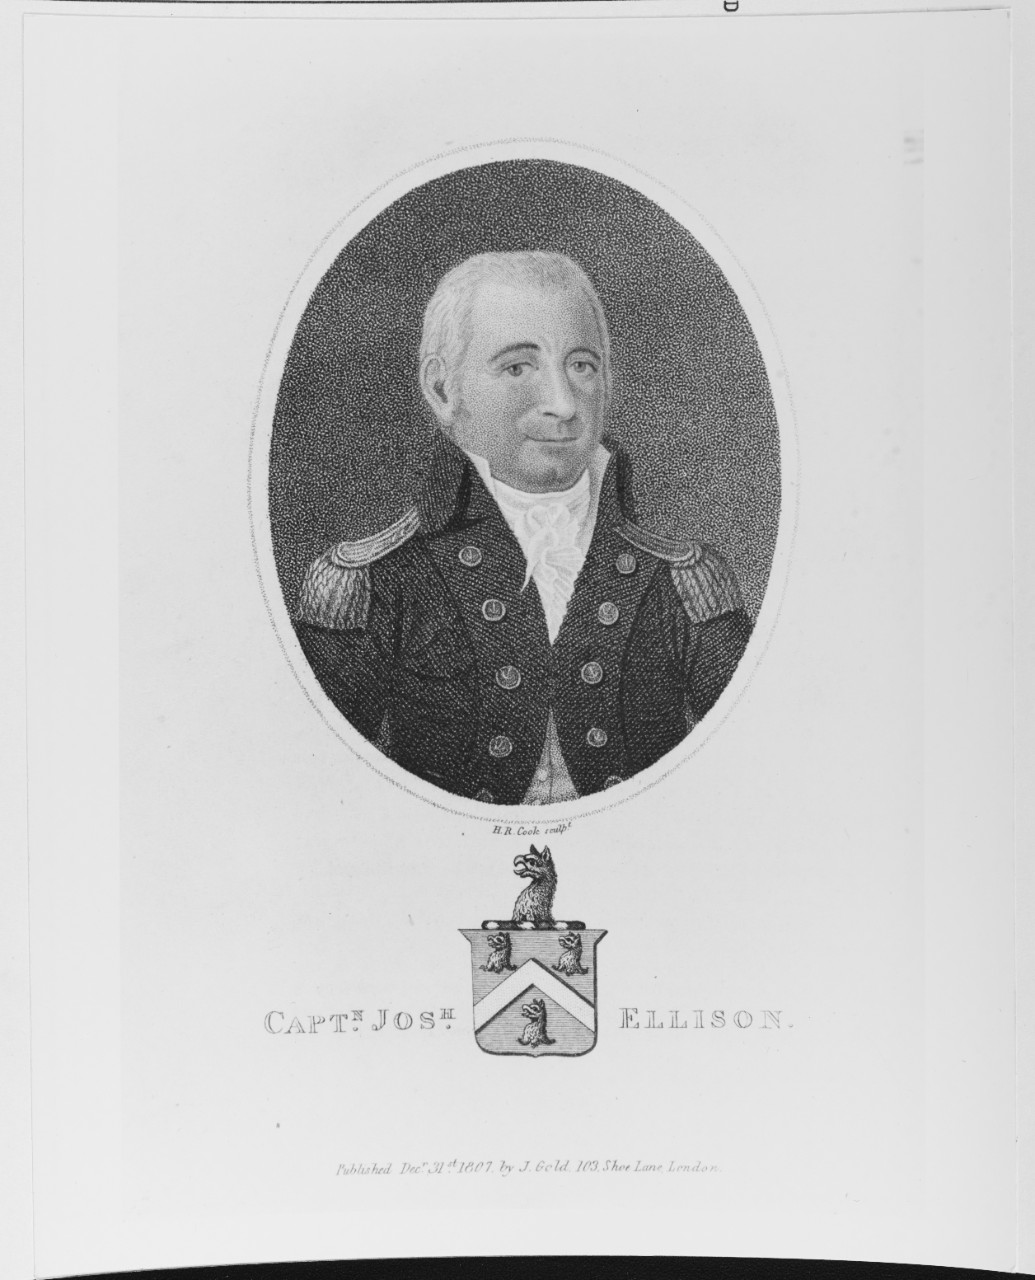 Captain Joseph Ellison, RN